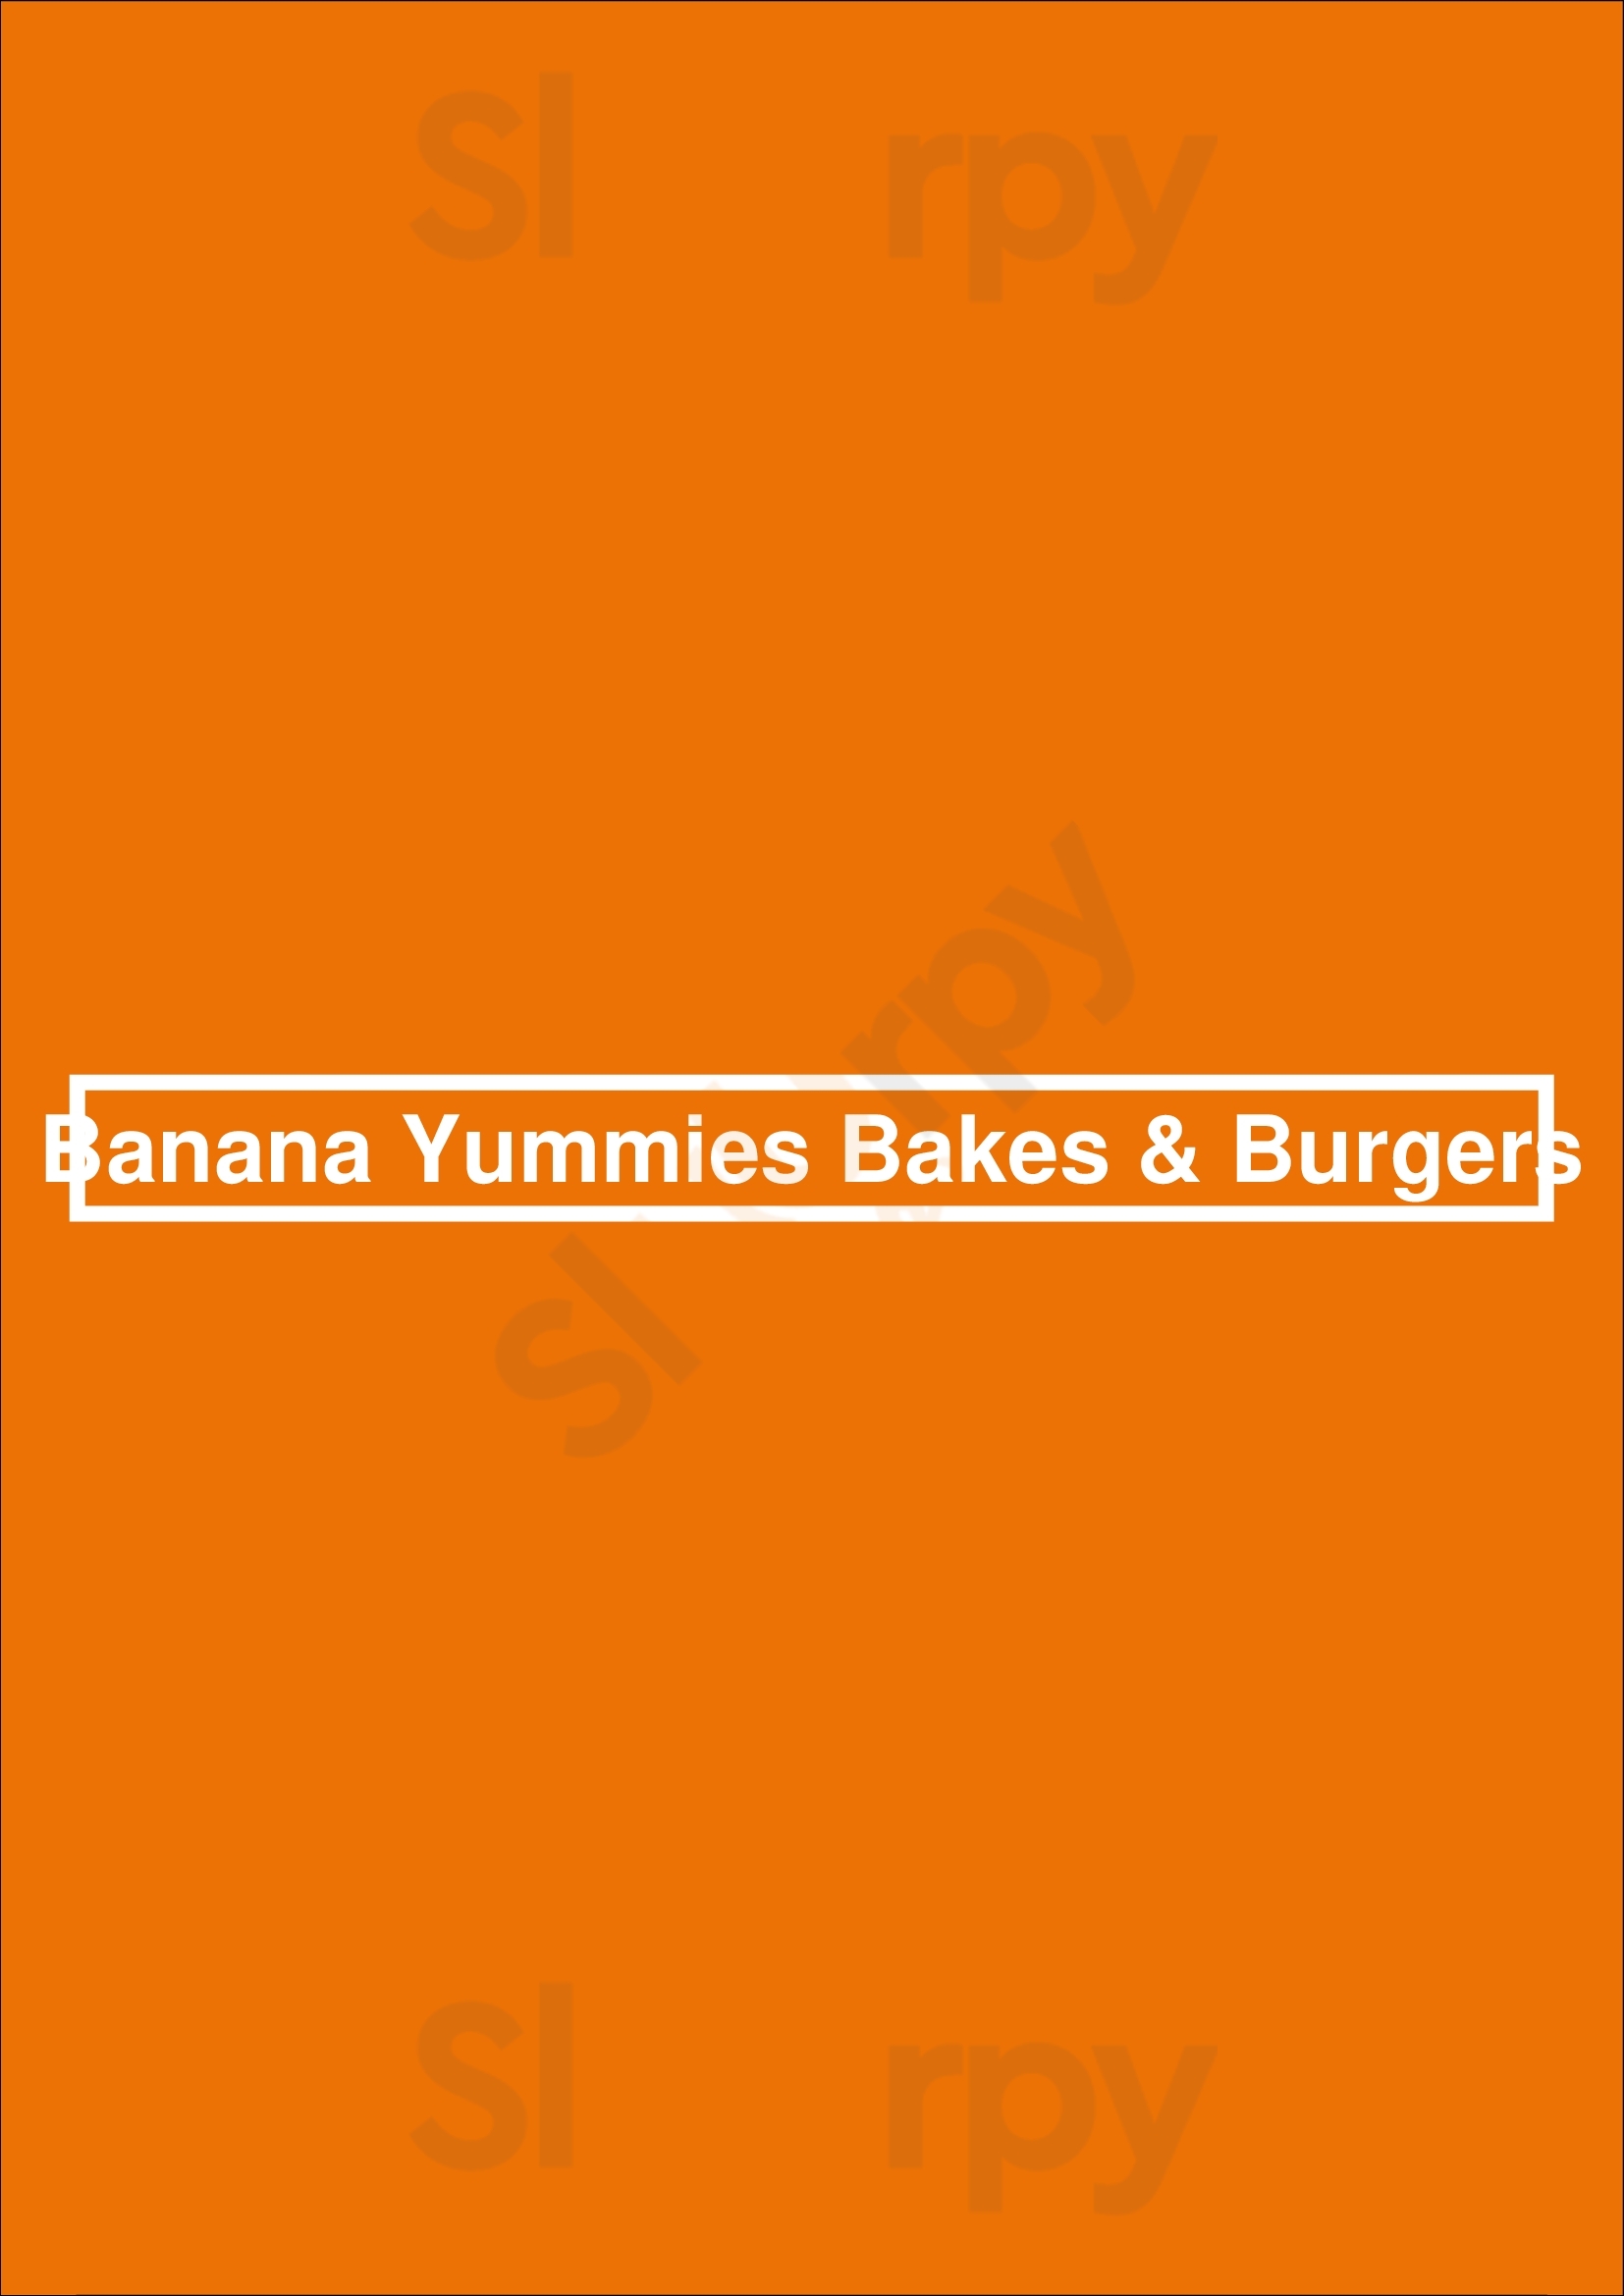 Banana Yummies Bakes & Burgers Saint Louis Menu - 1